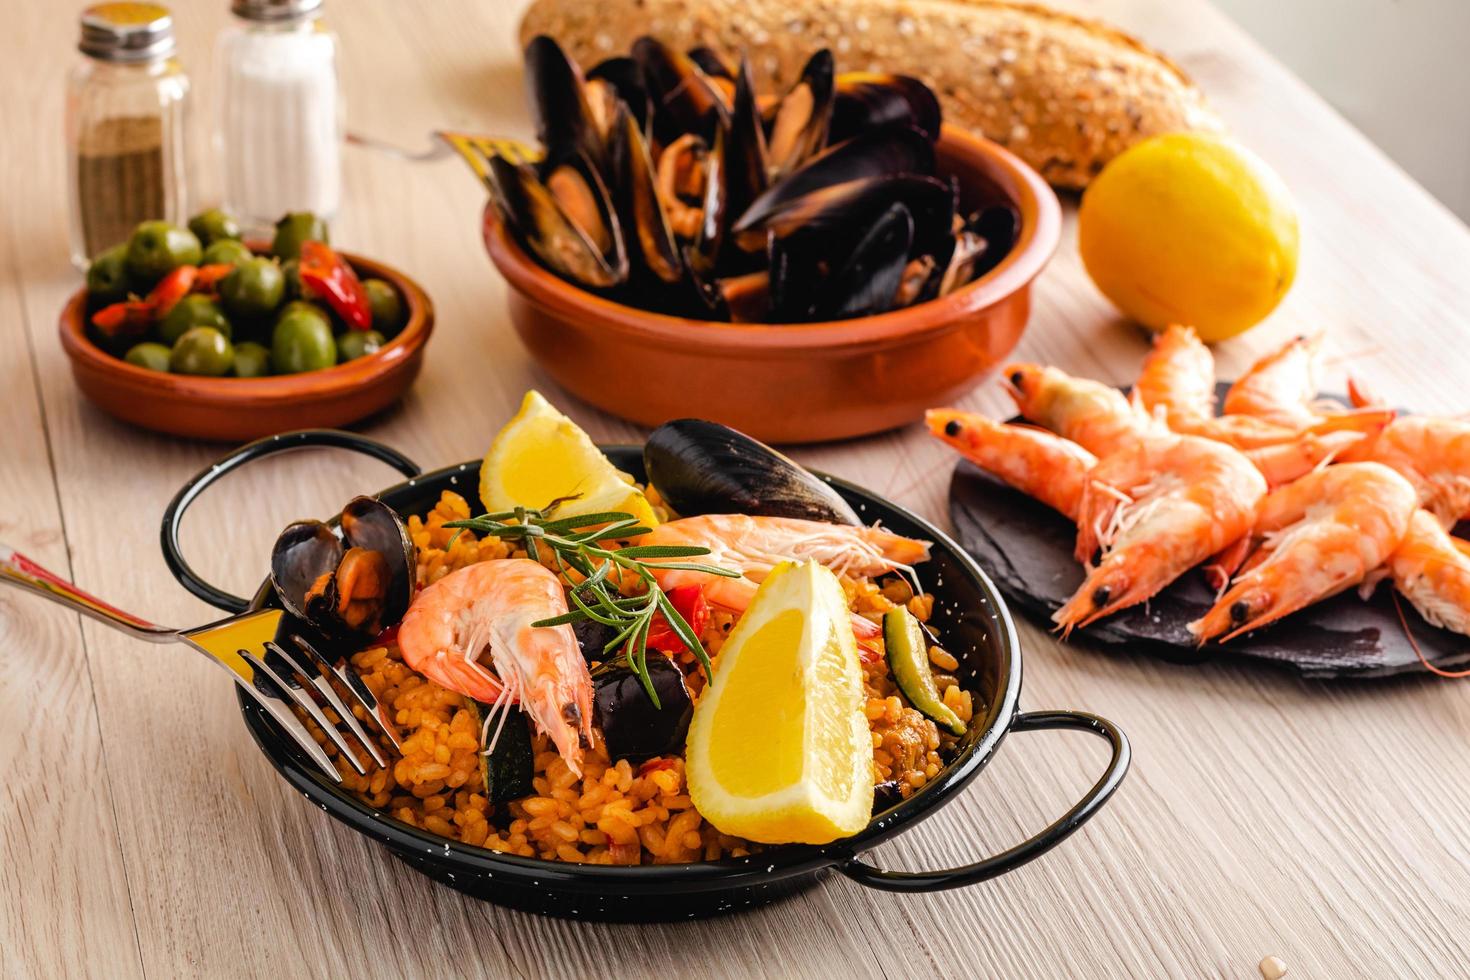 Traditional Spanish paella with seafood photo